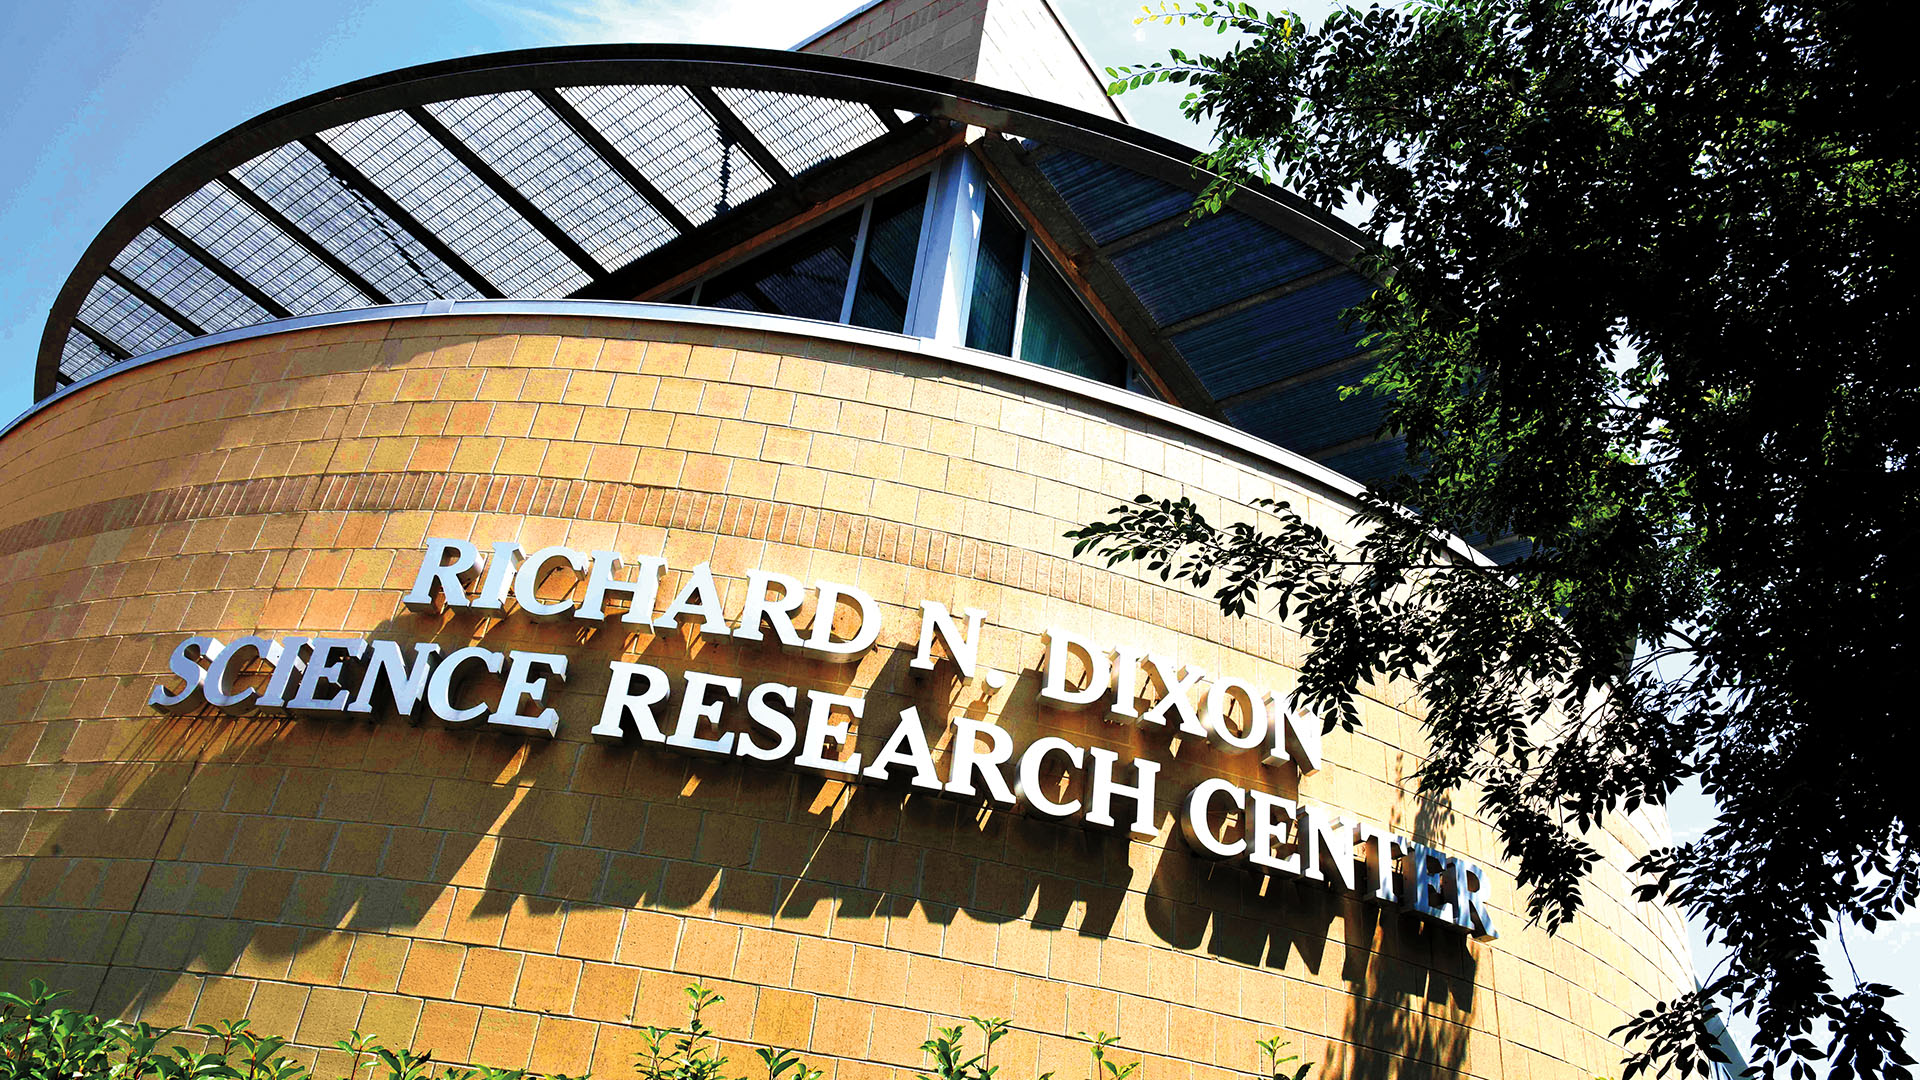 Dixon Research Center